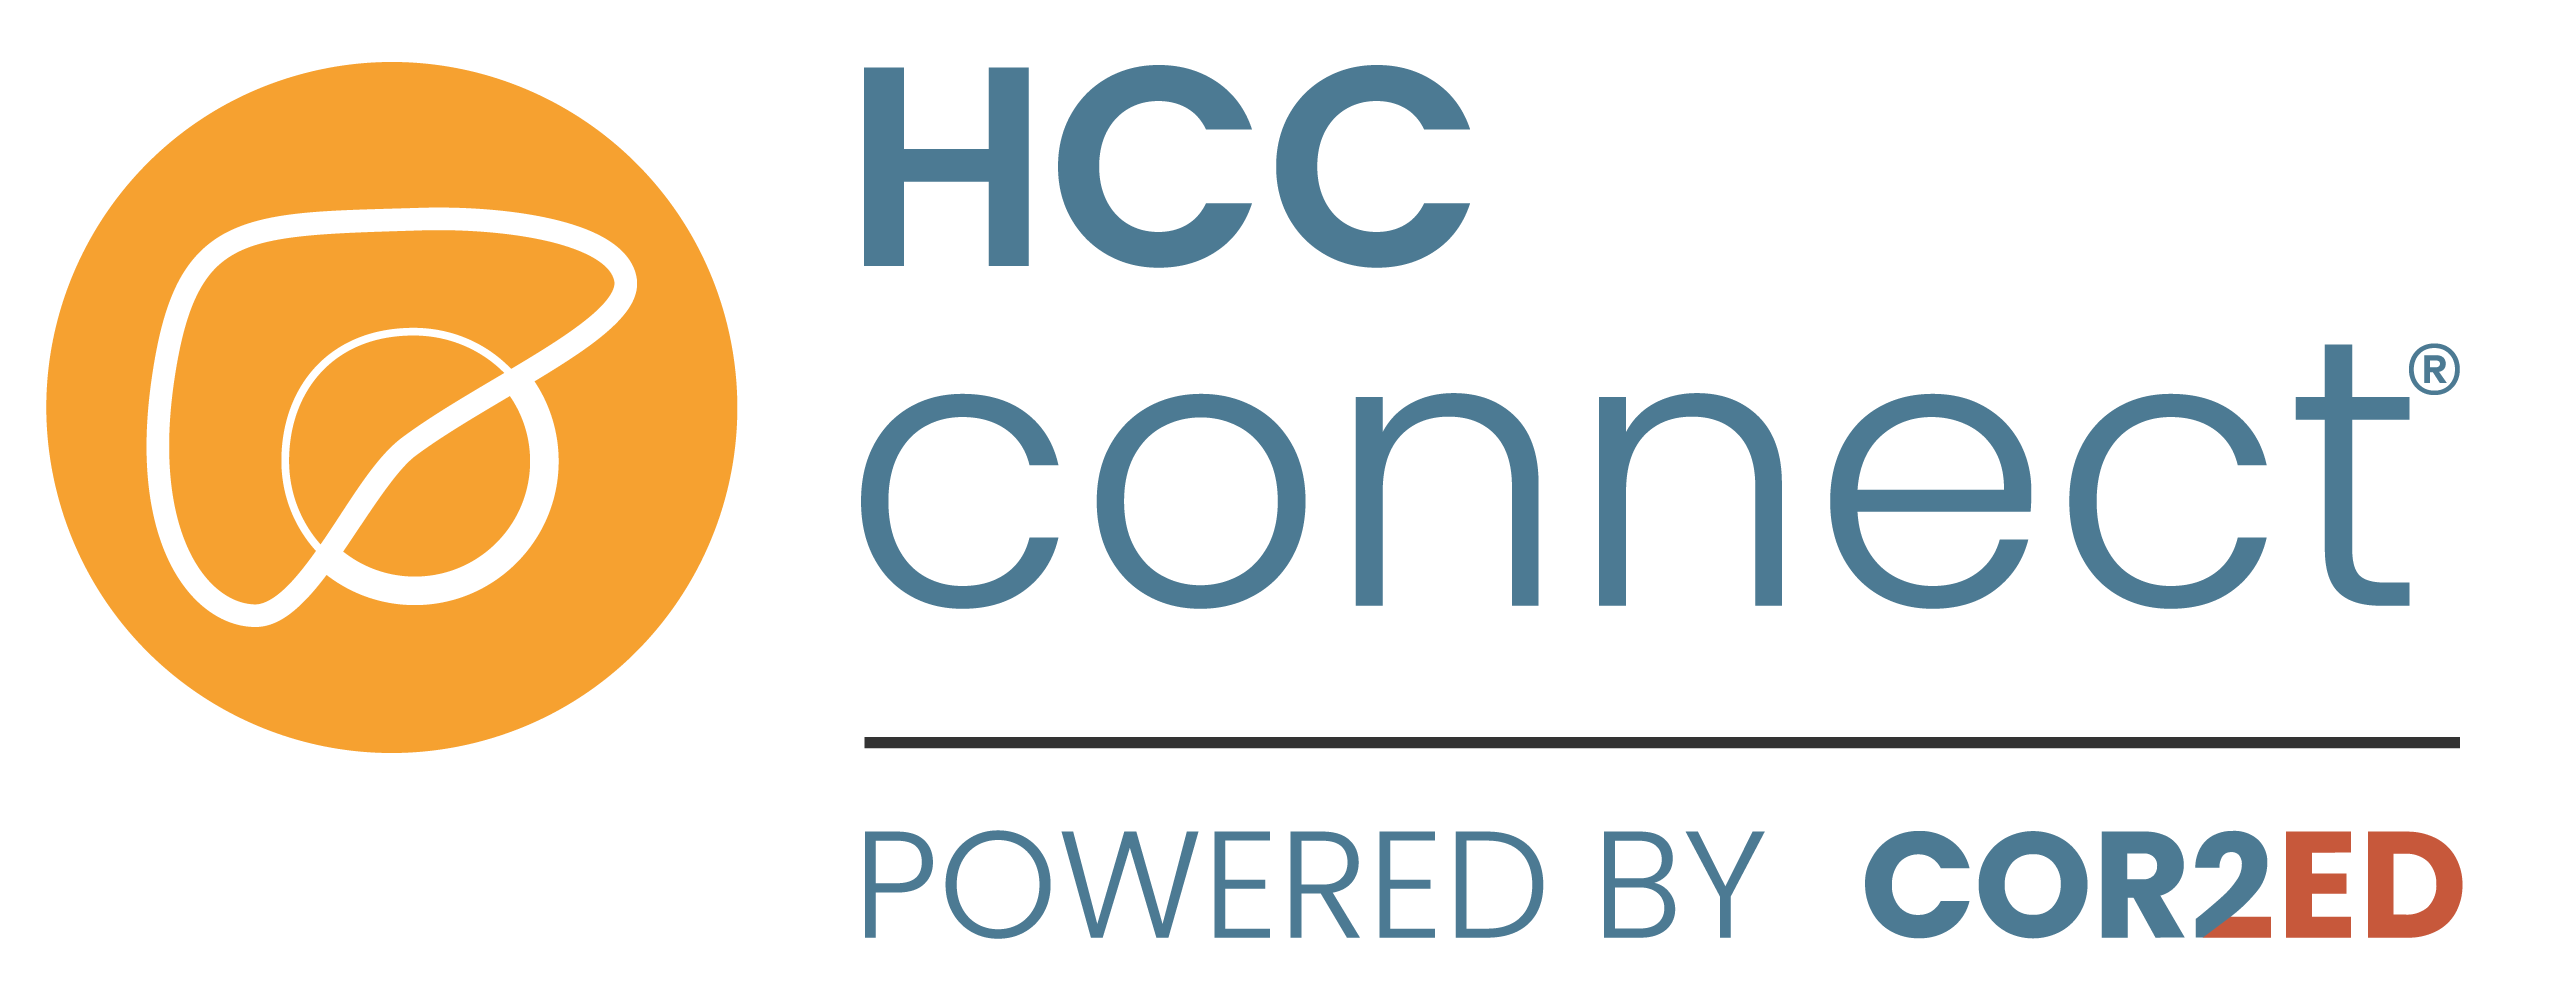 HCC CONNECT